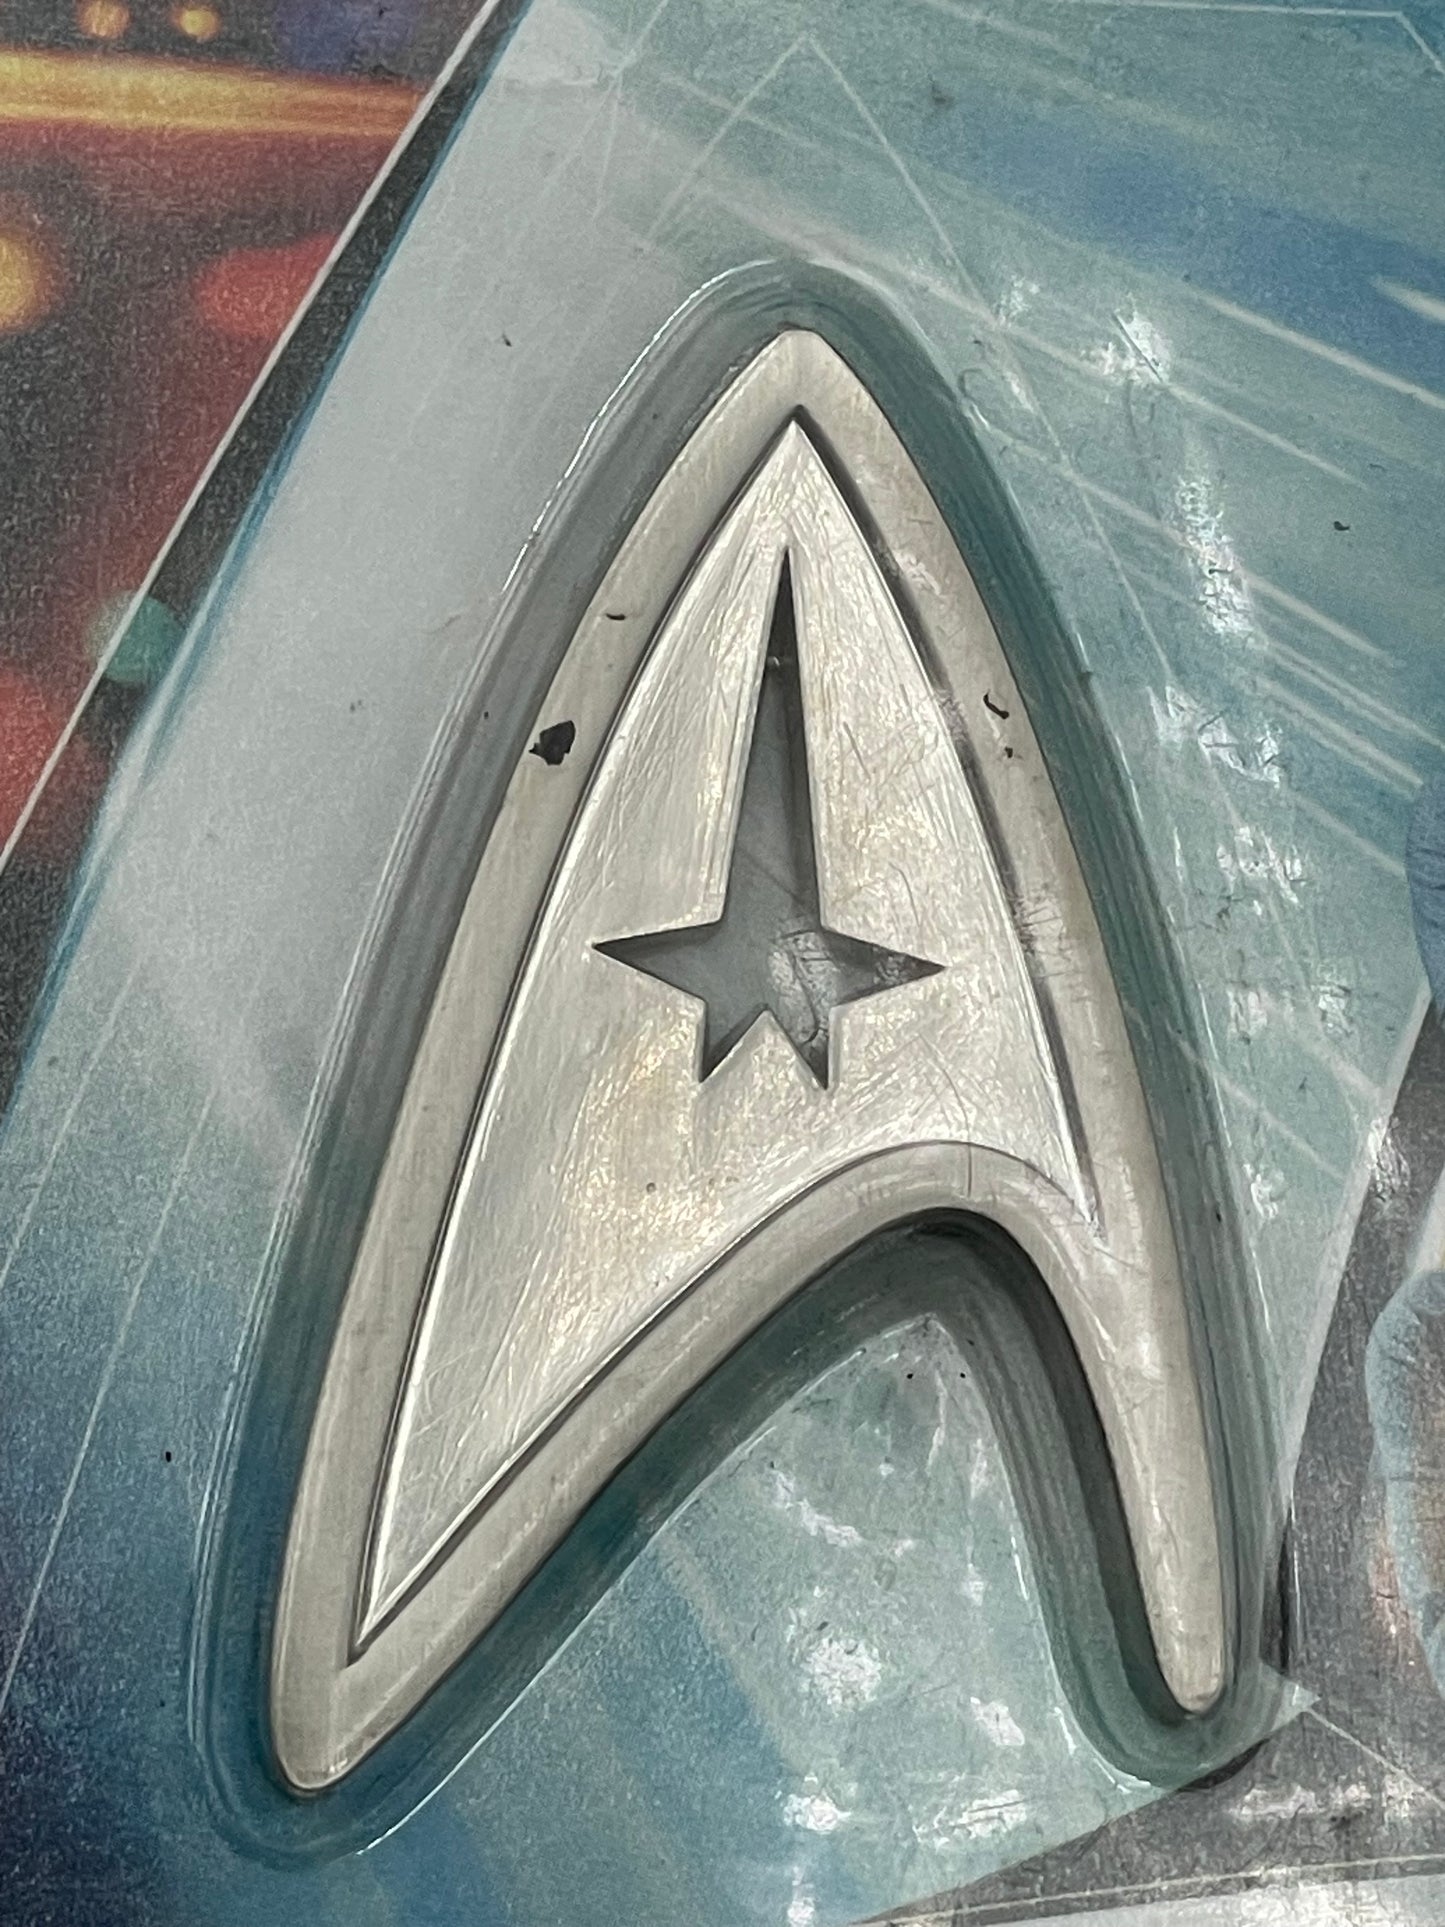 Star Trek Command Pin 2009 #102471